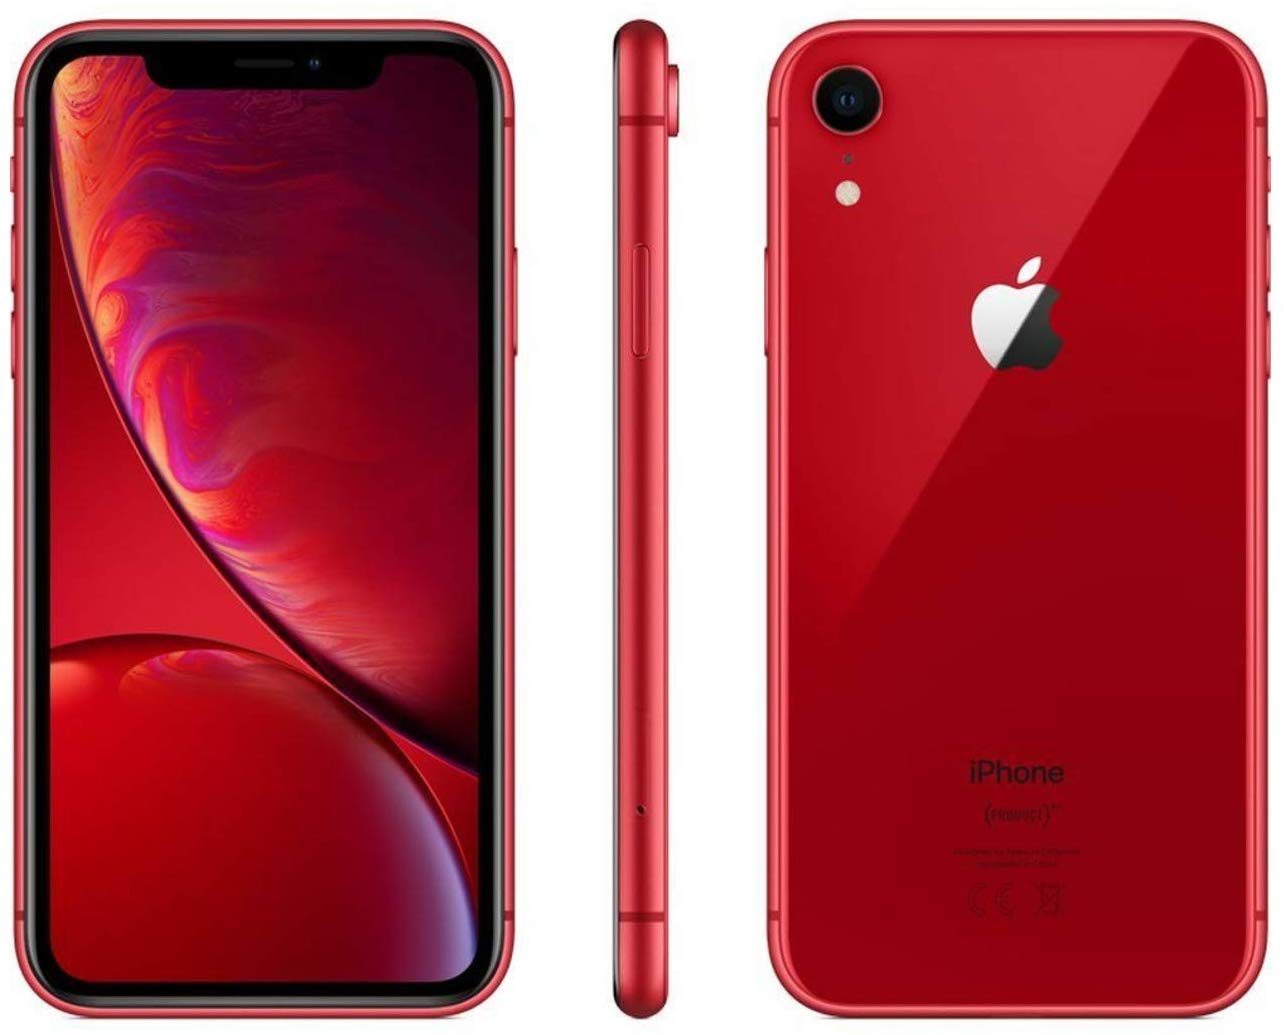 Apple Iphone XR, 128GB Storage, GSM Factory Unlocked Smartphone - Red